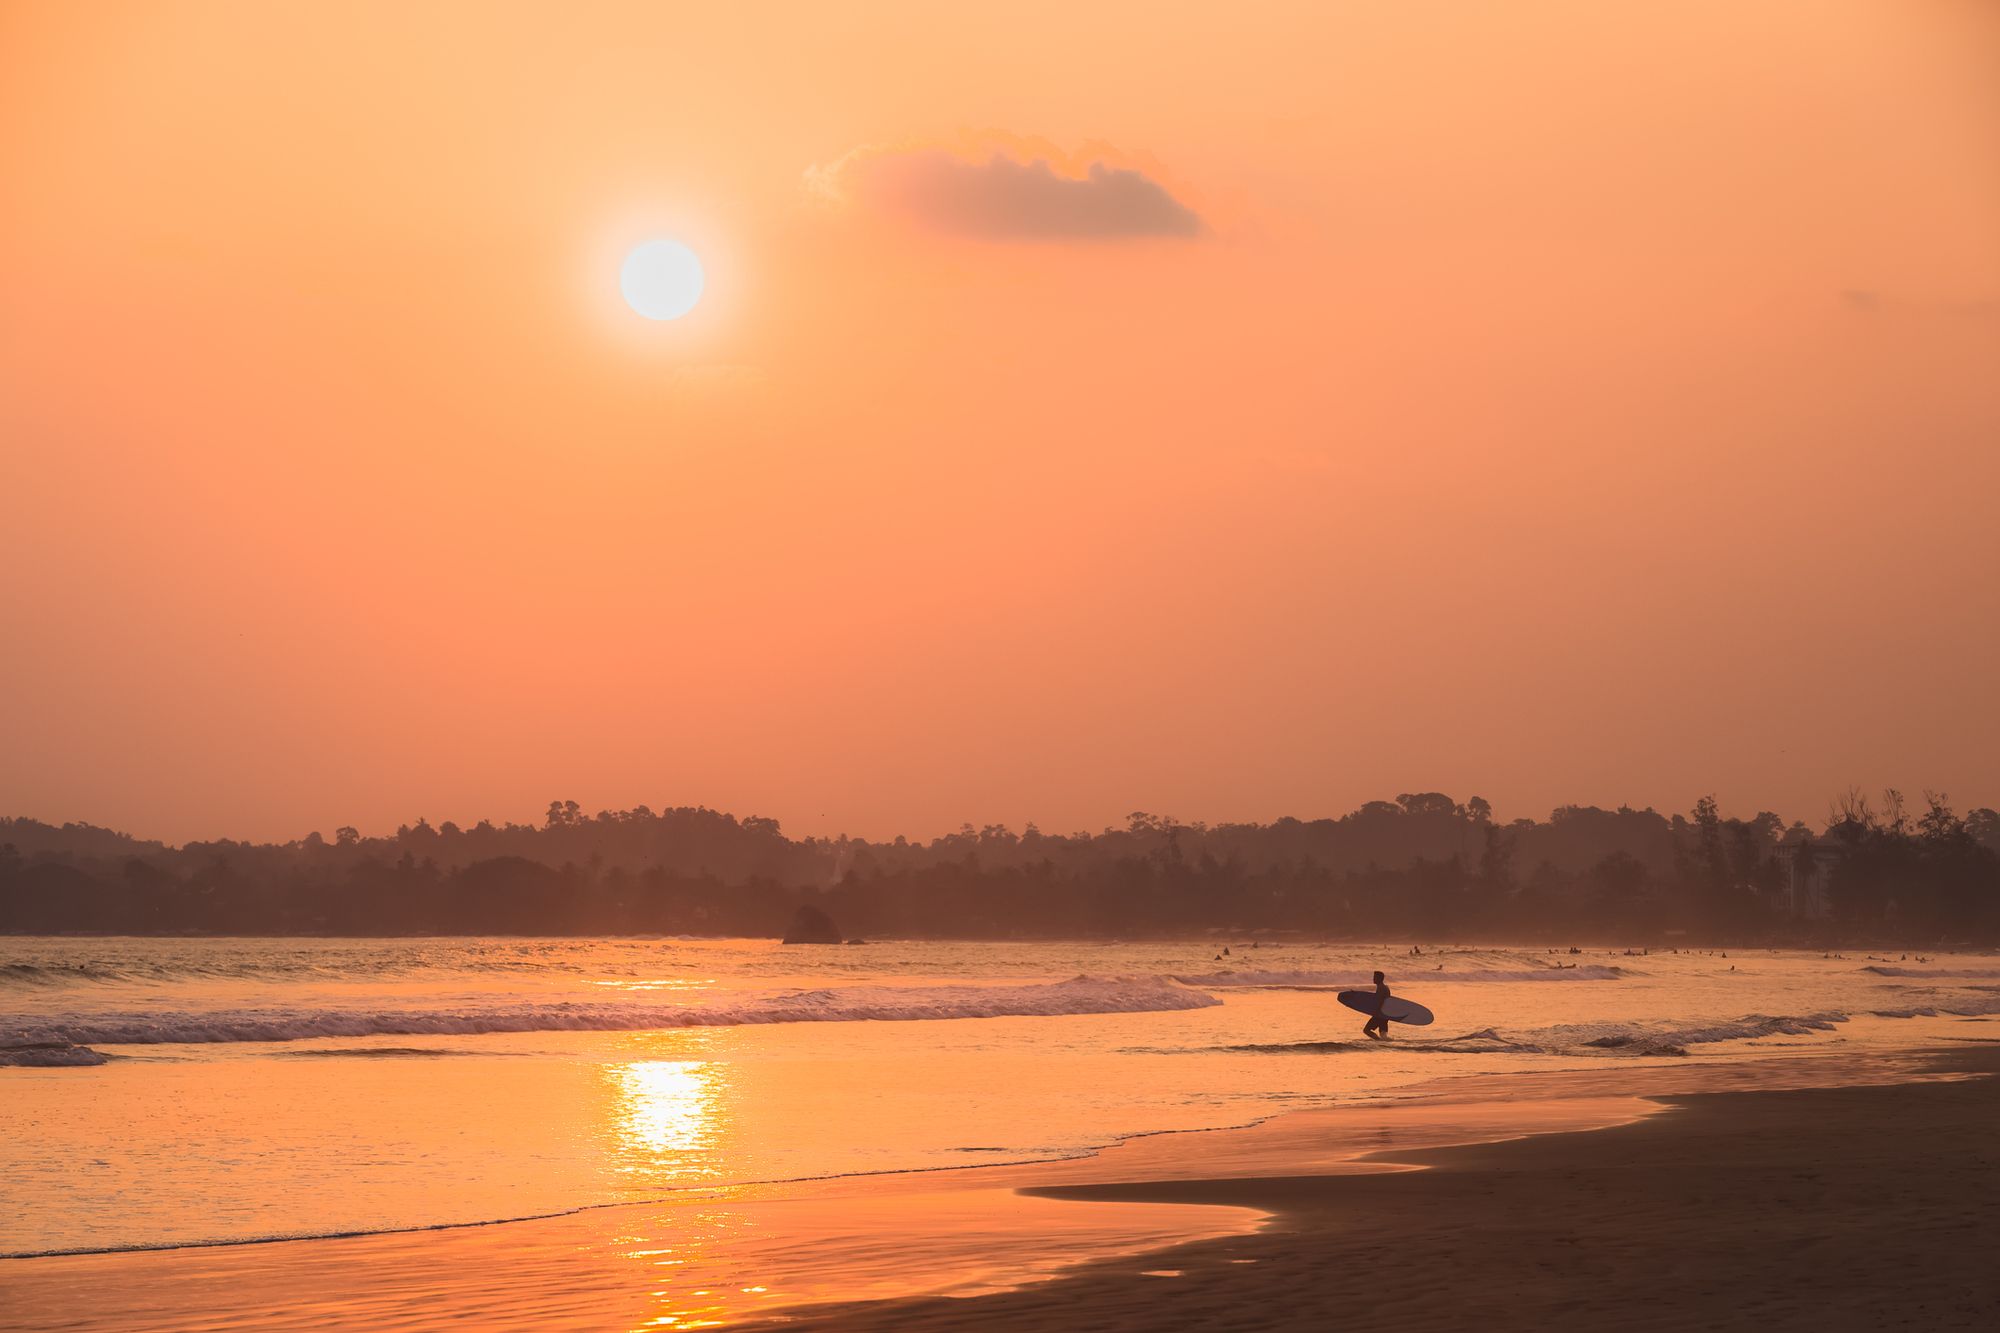 Surfer paddling out at Weligama, Sri Lanka at sunset